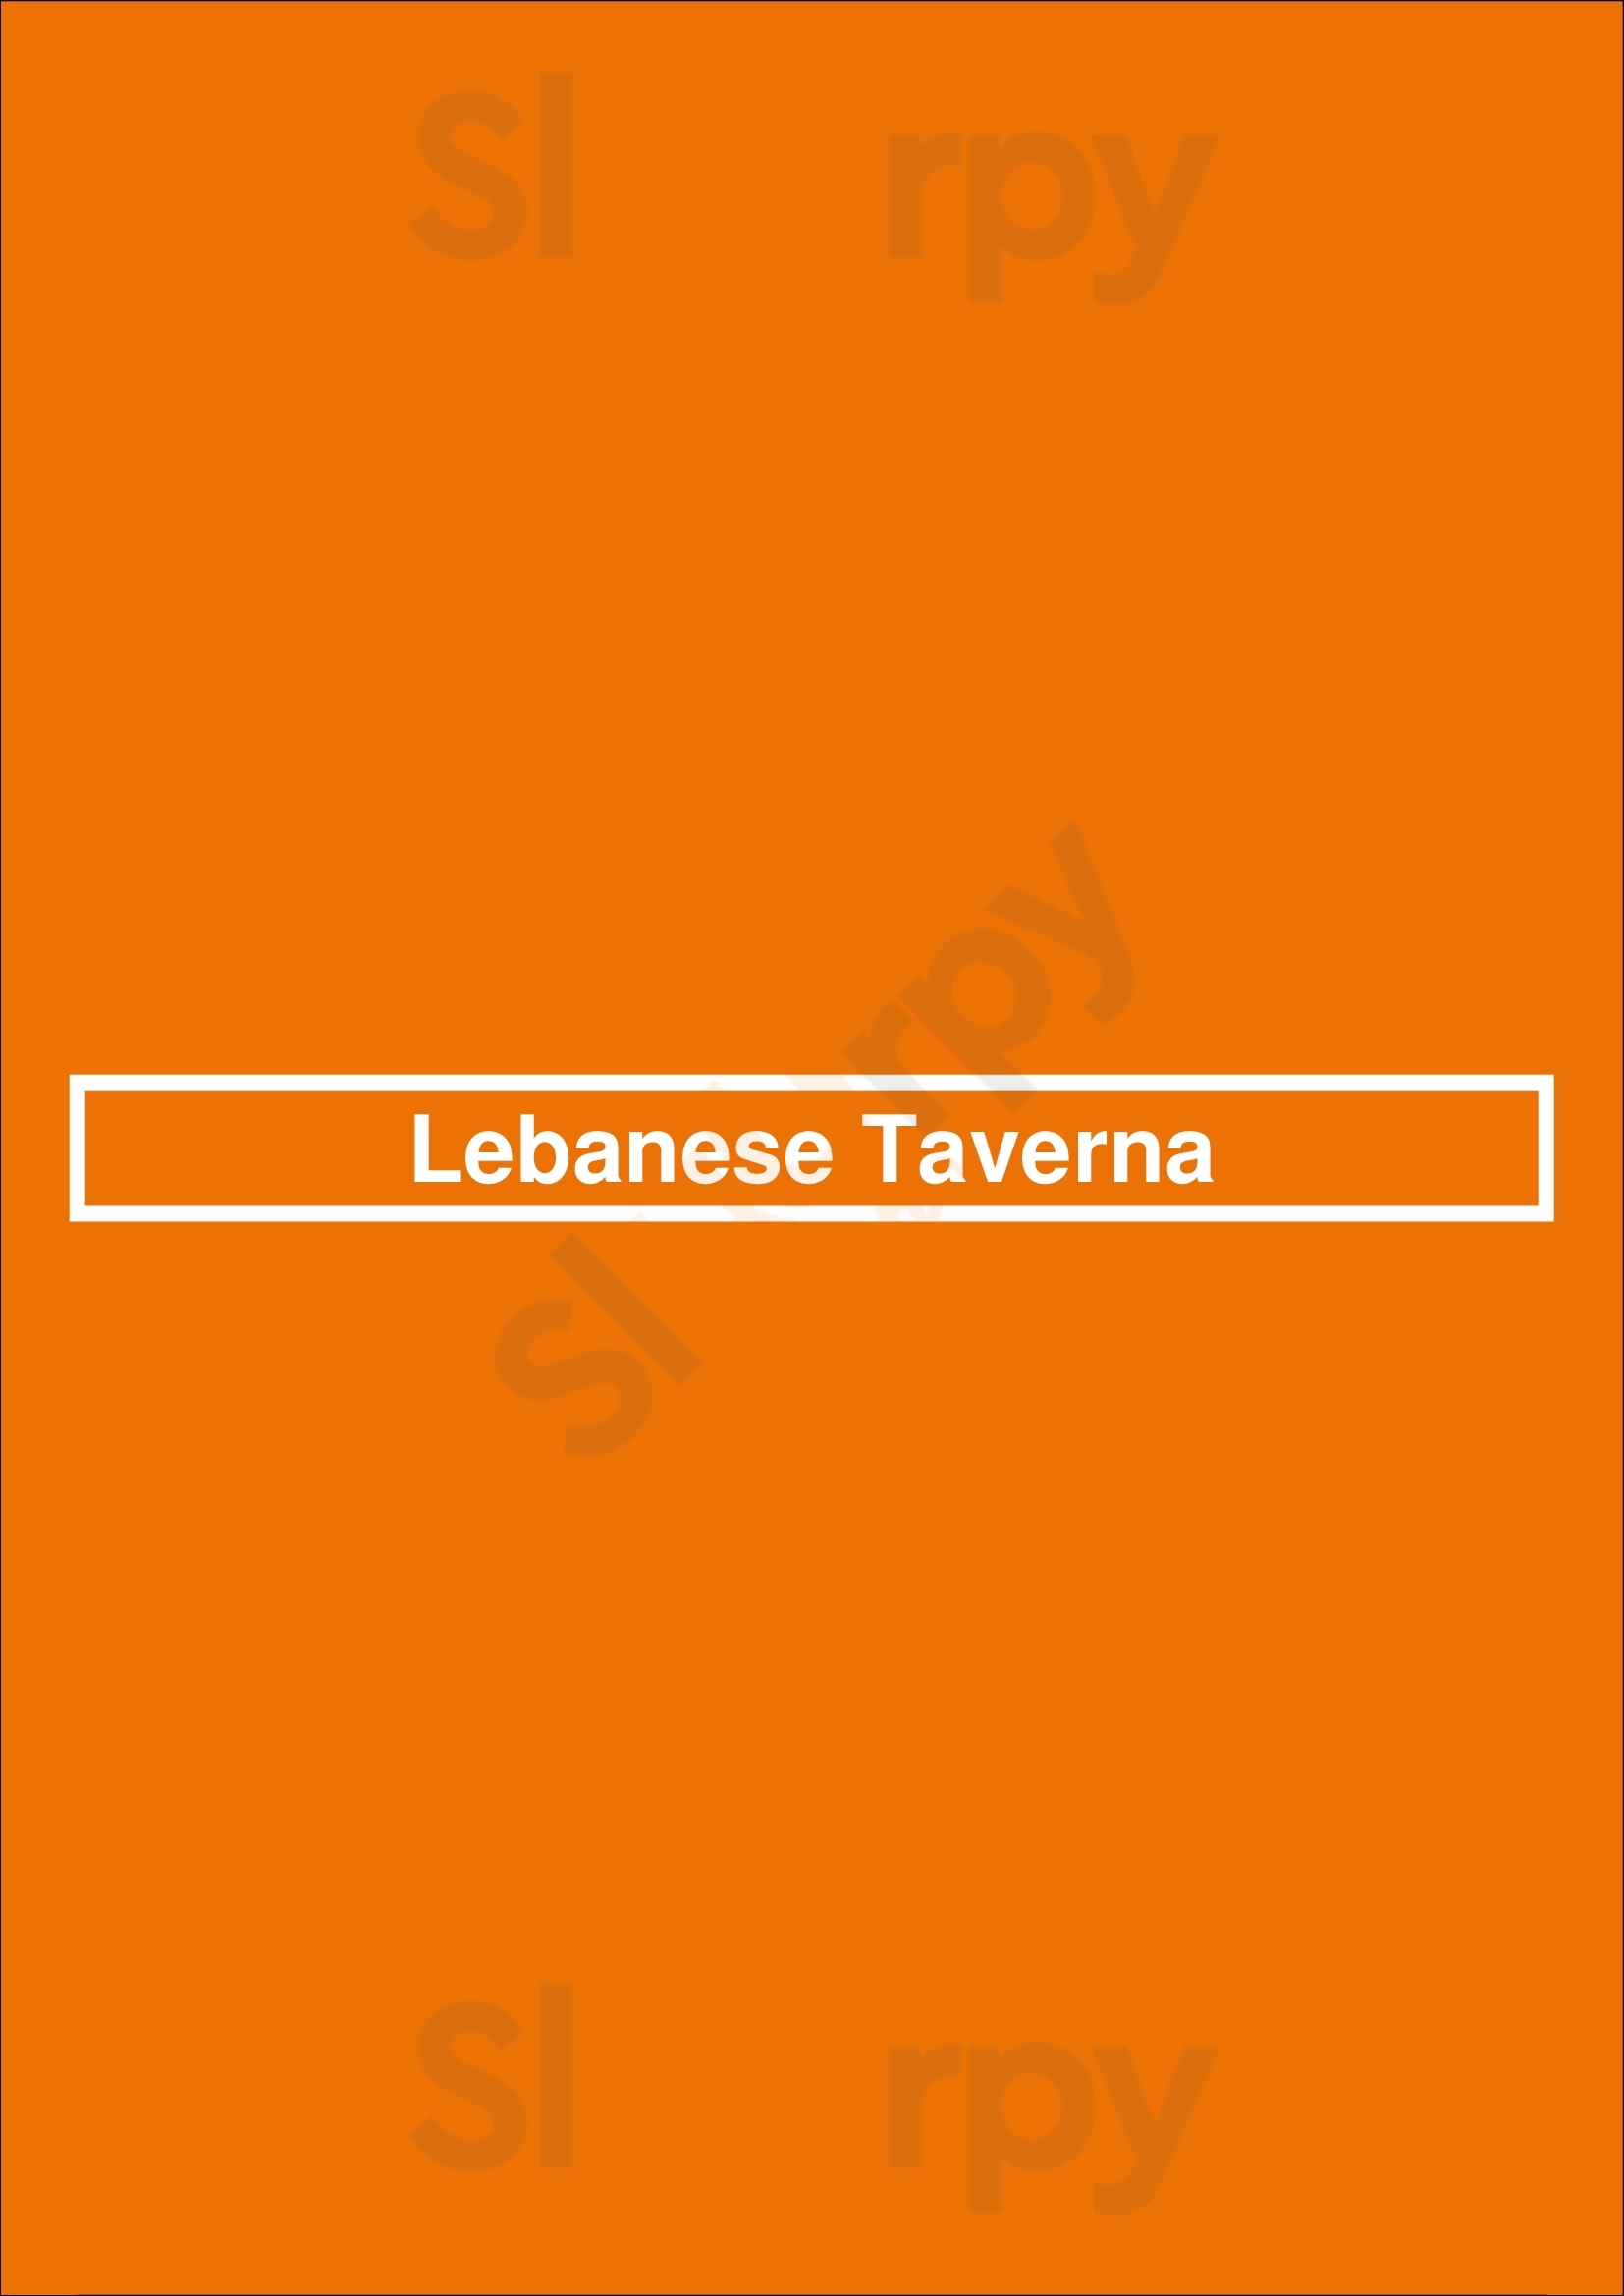 Lebanese Taverna Baltimore Menu - 1